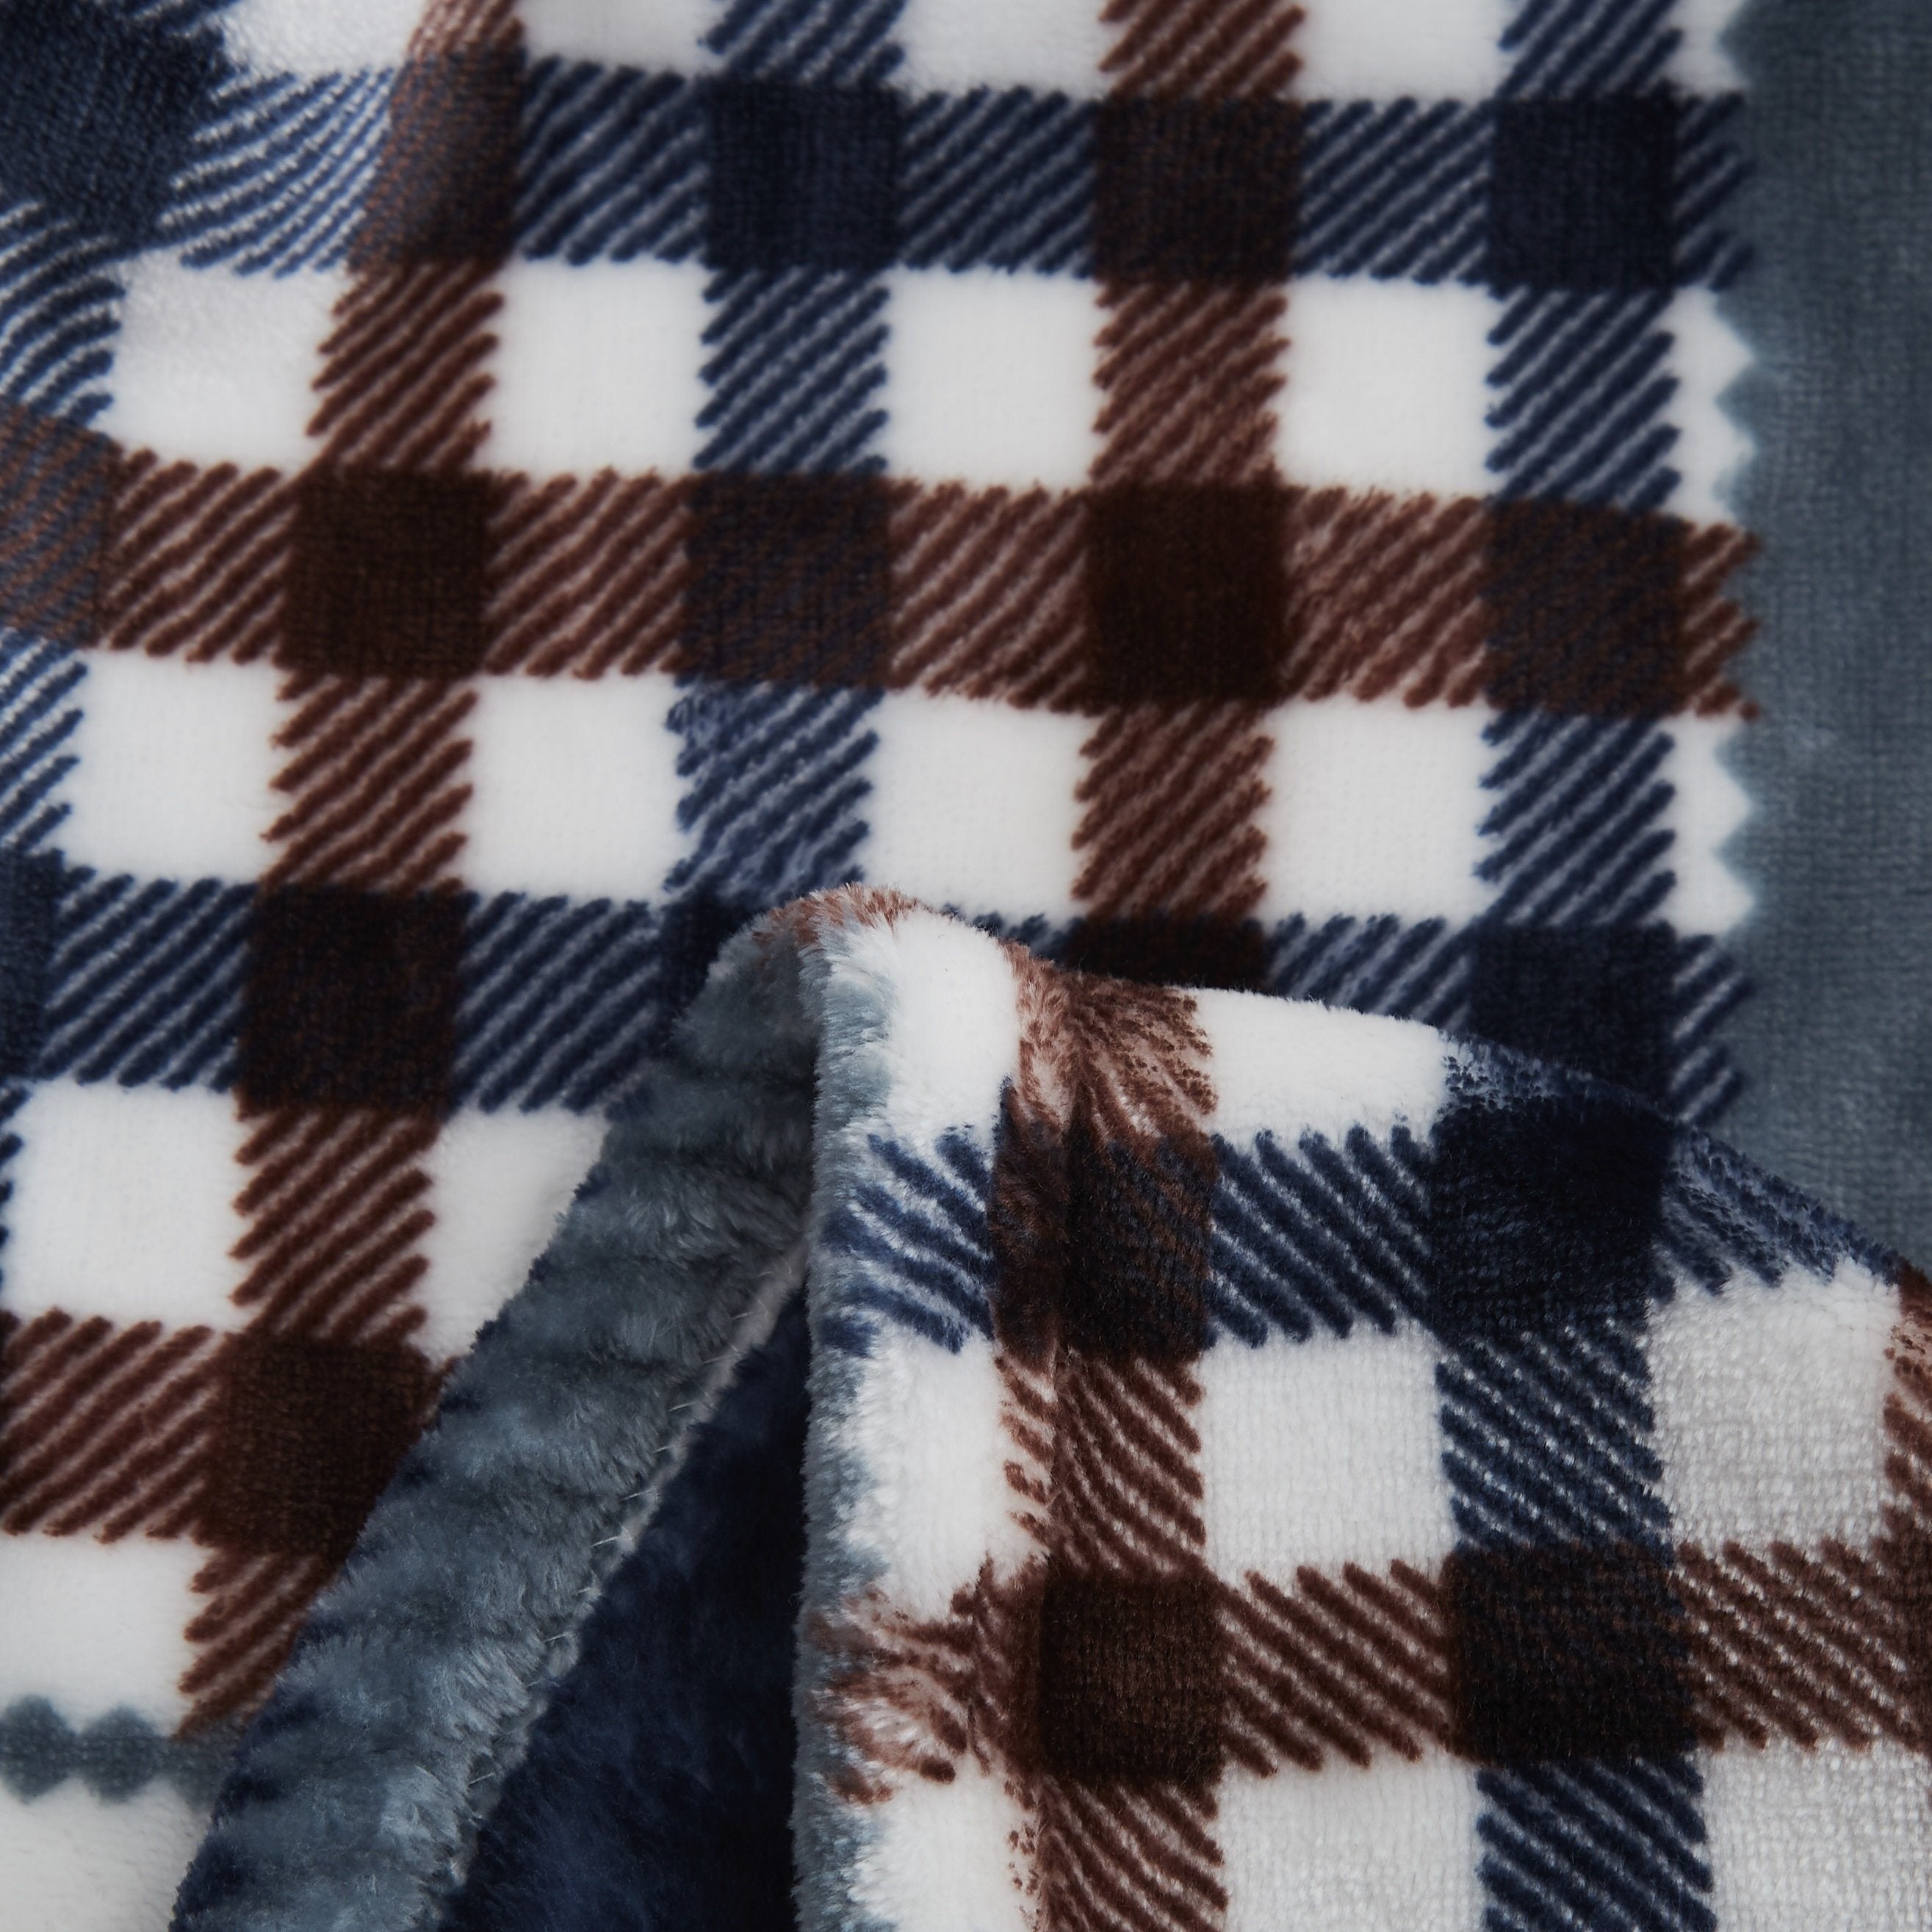 Tache Blue Lake Farmhouse Super Soft Plaid Patchwork Throw Blanket (4024) - Tache Home Fashion